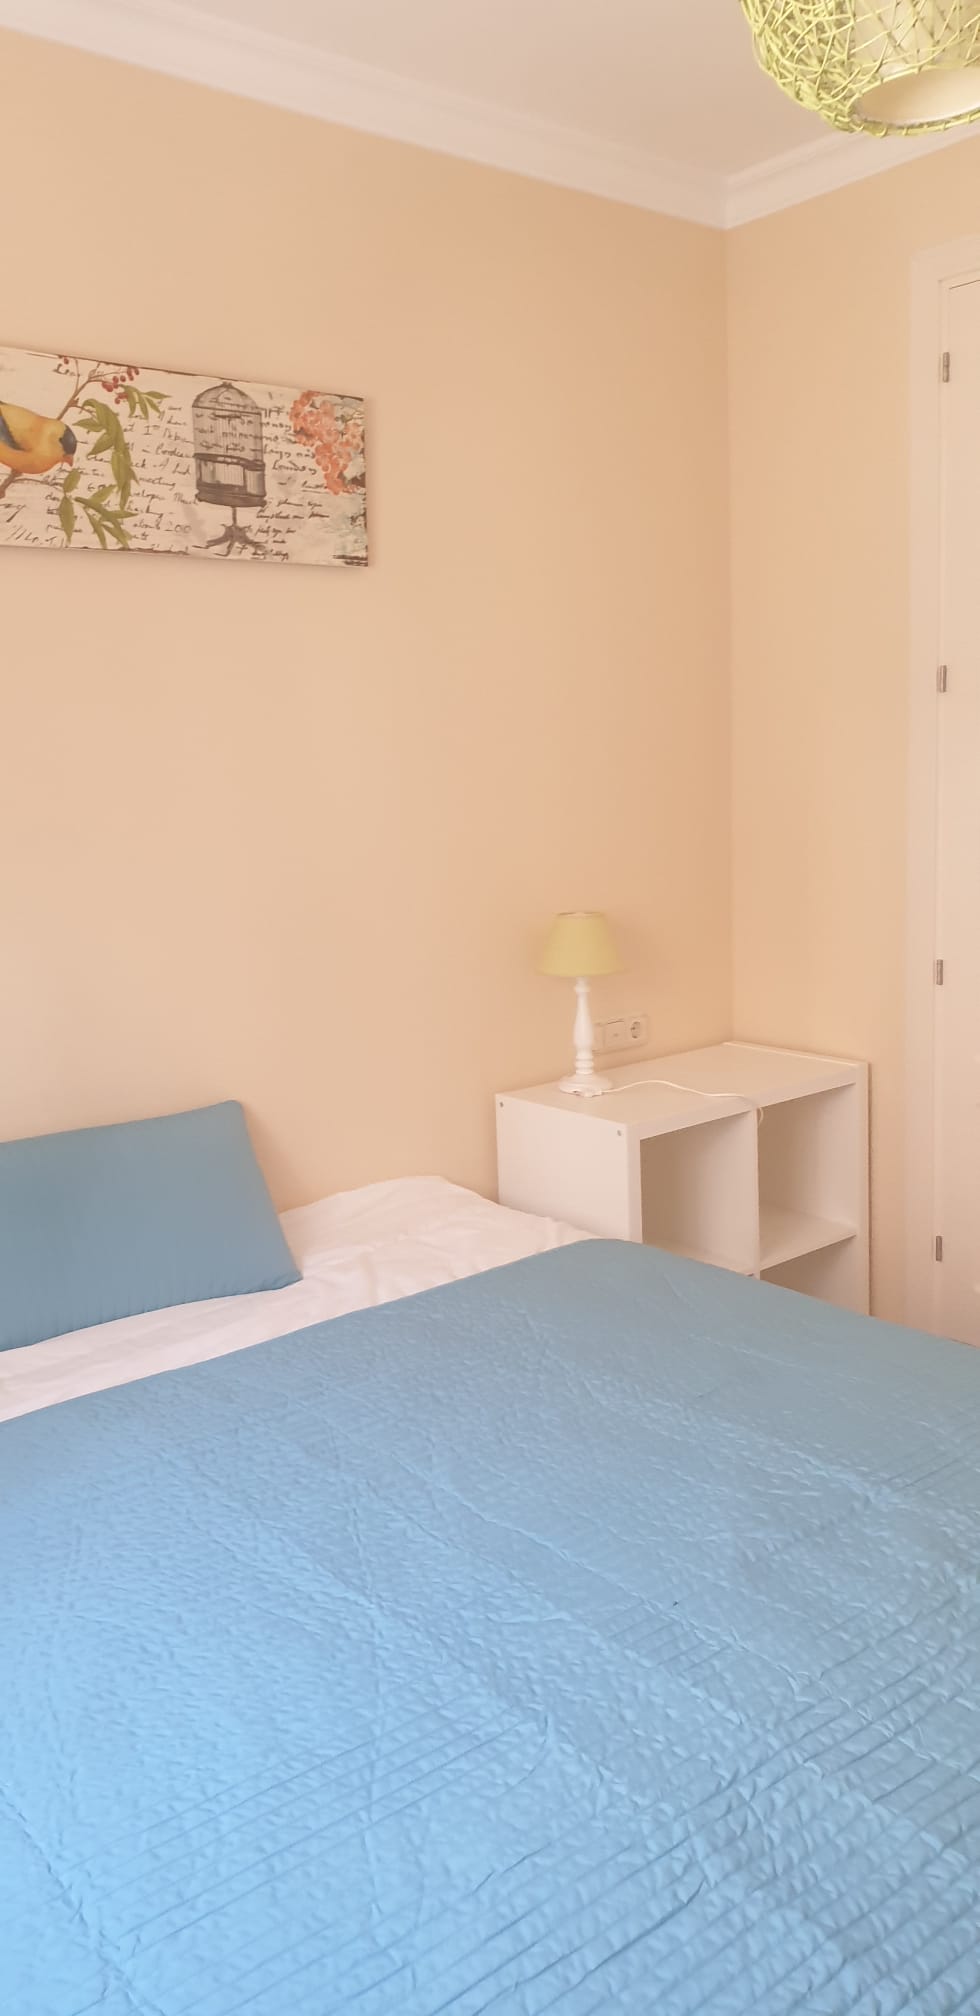 3 bedroom townhouse in Elviria (Marbella) for rent - mibgroup.es